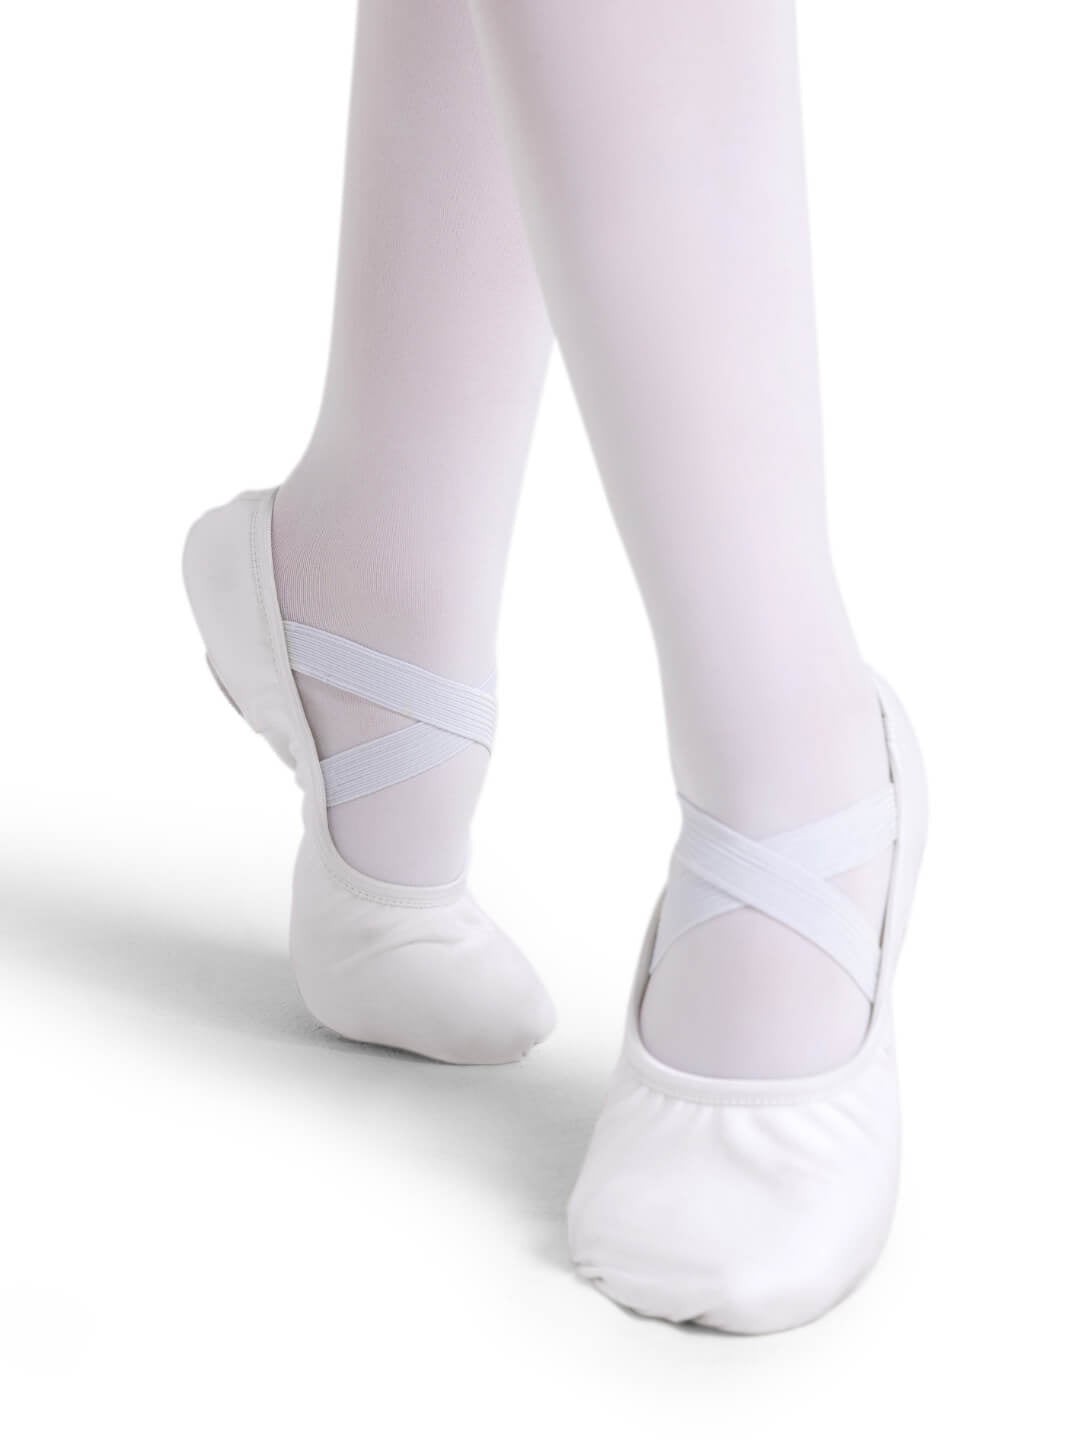 Hanami Canvas Ballet Shoe - White